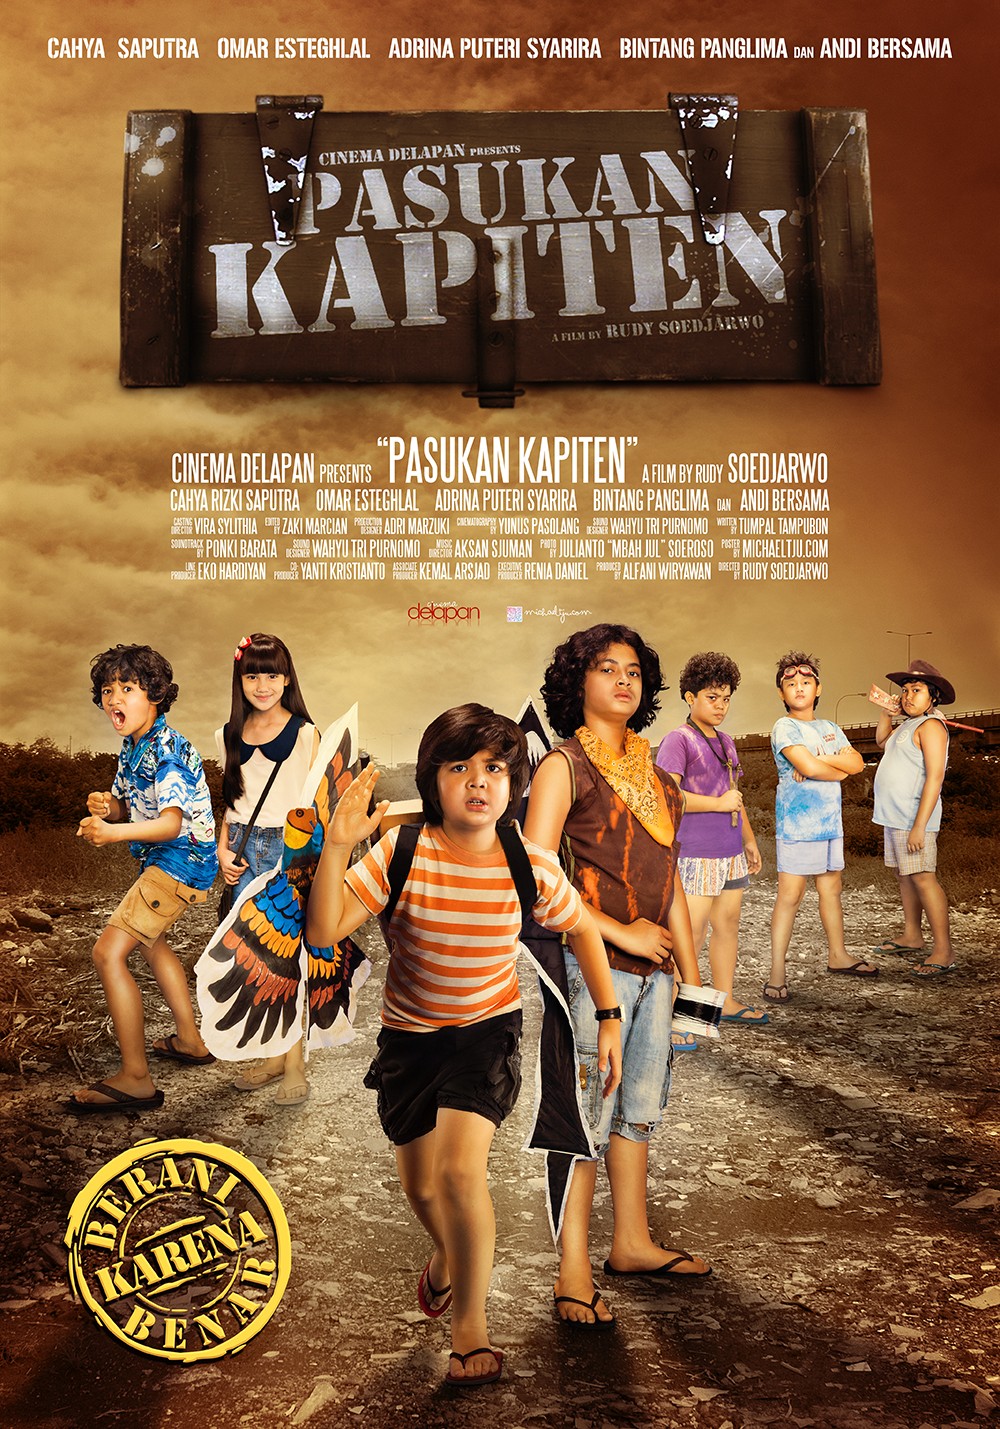 Extra Large Movie Poster Image for Pasukan Kapiten (#4 of 4)